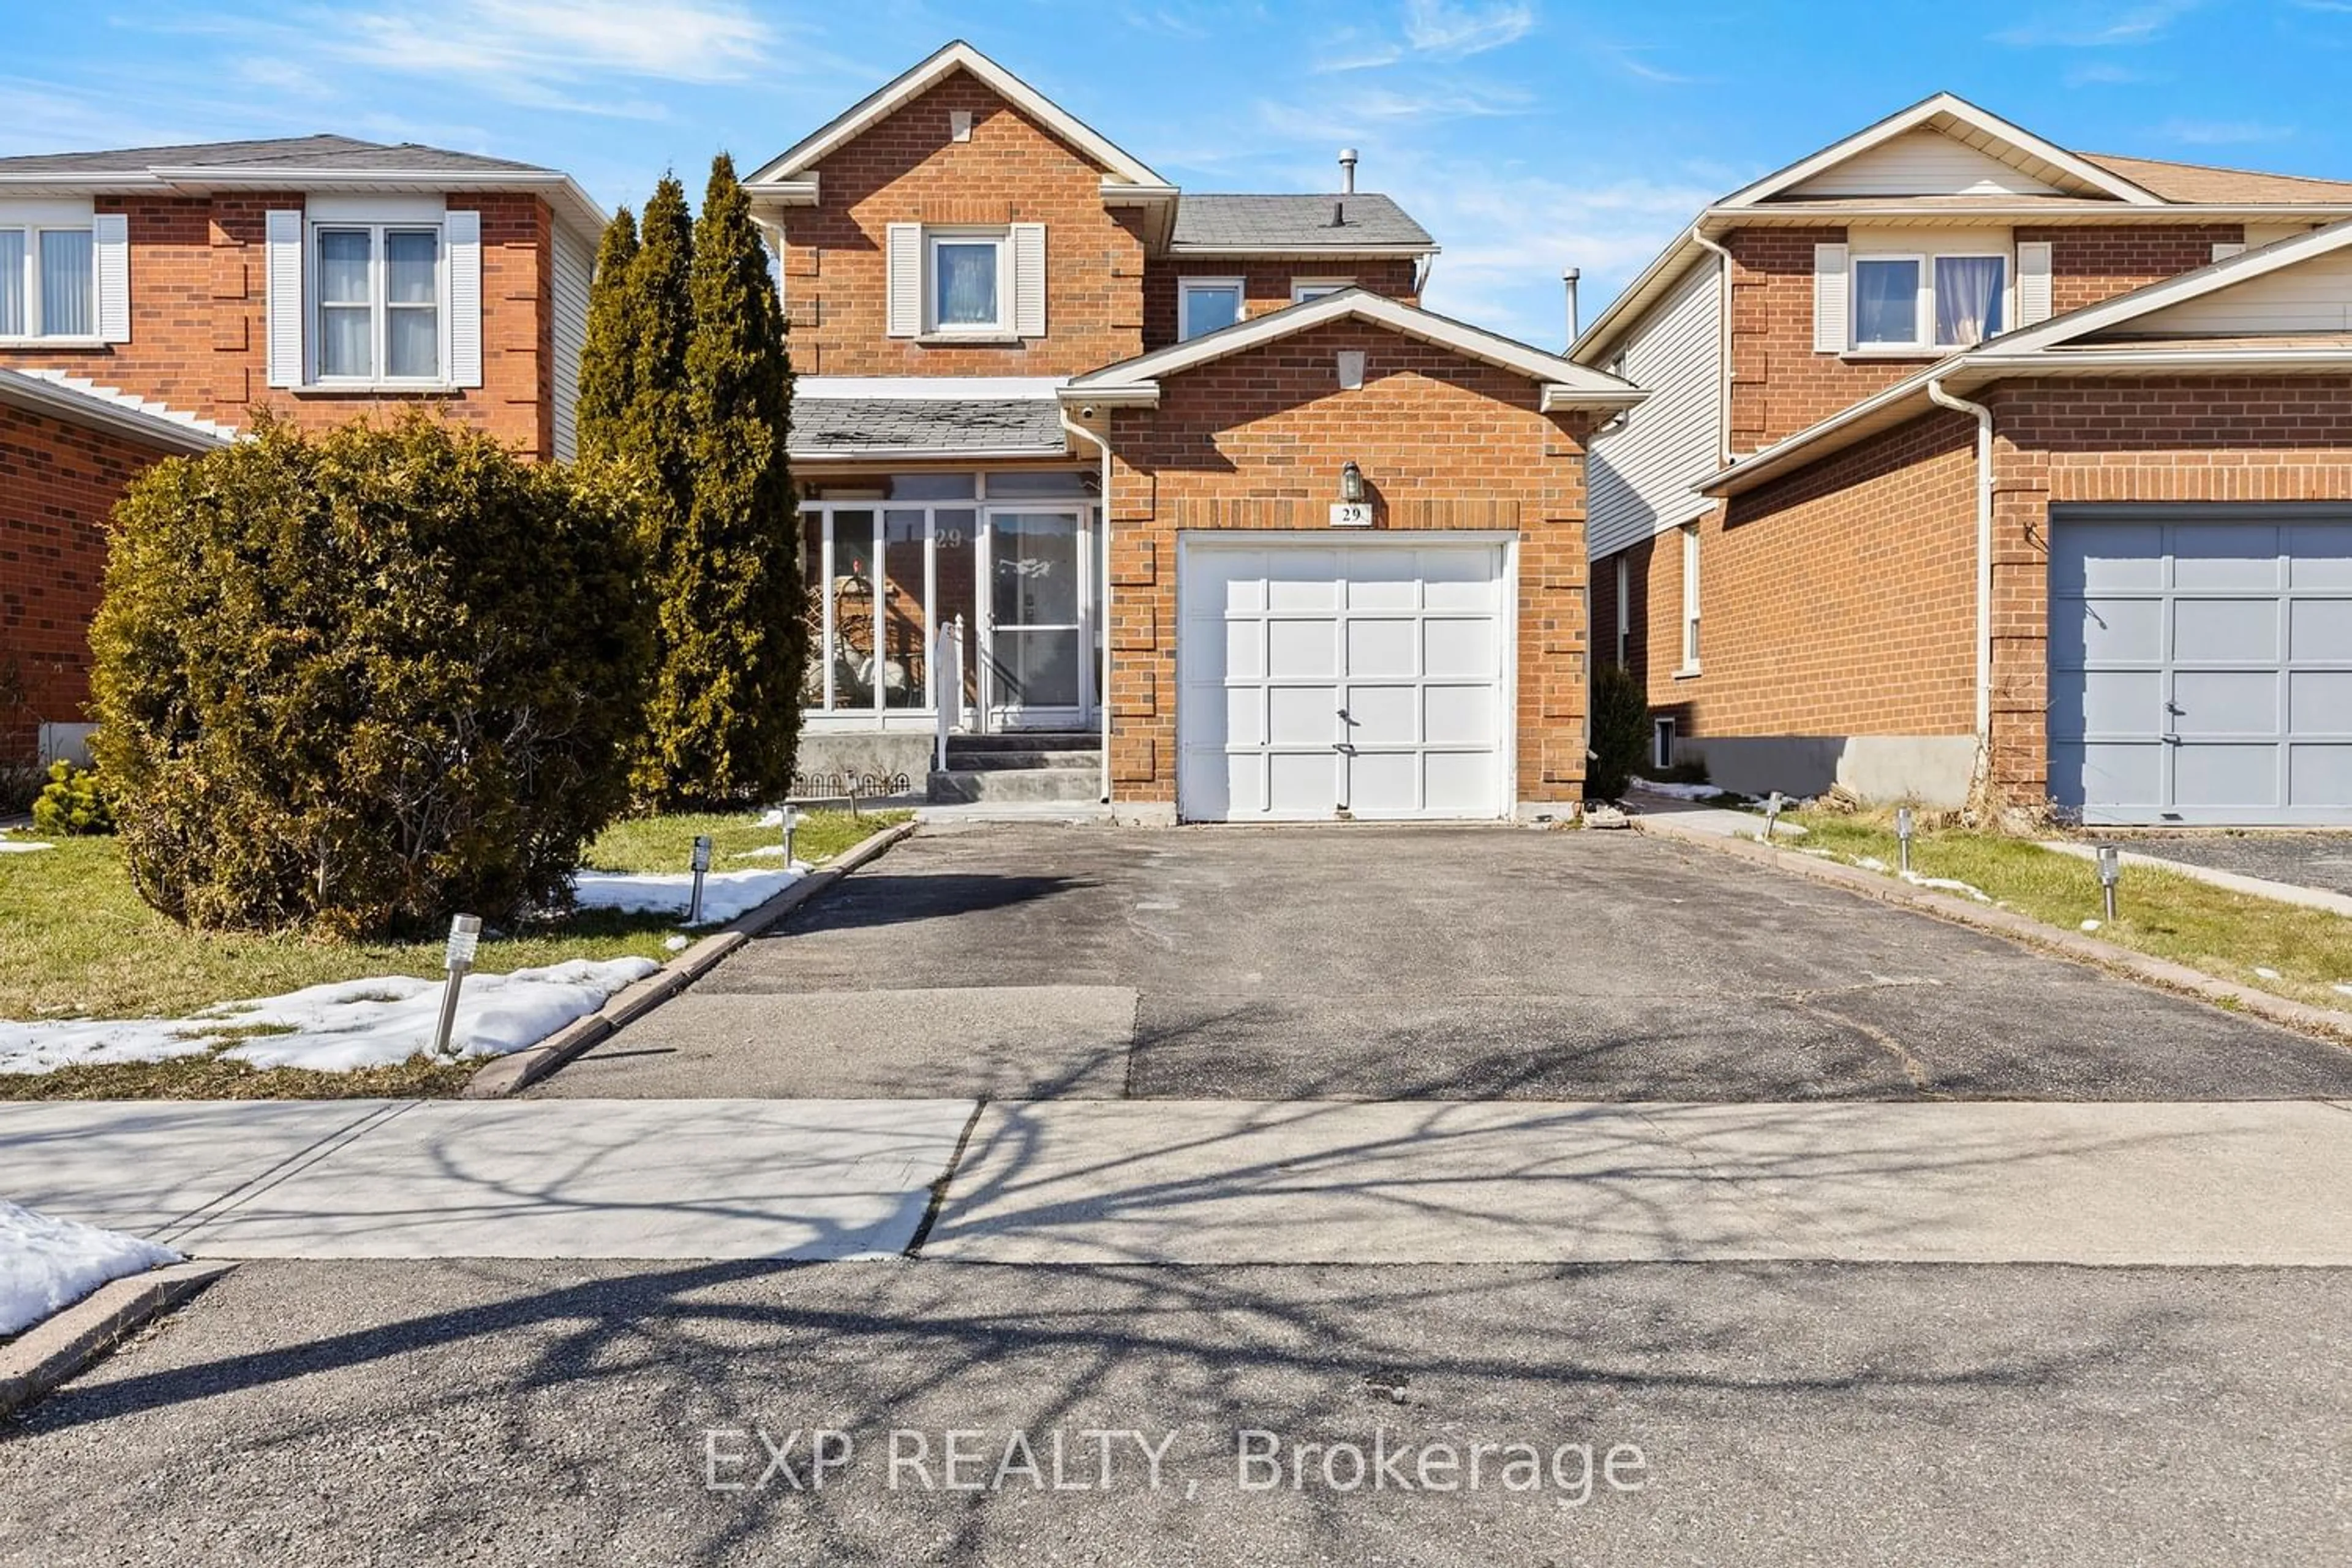 Frontside or backside of a home for 29 Stalbridge Ave, Brampton Ontario L6Y 4H1